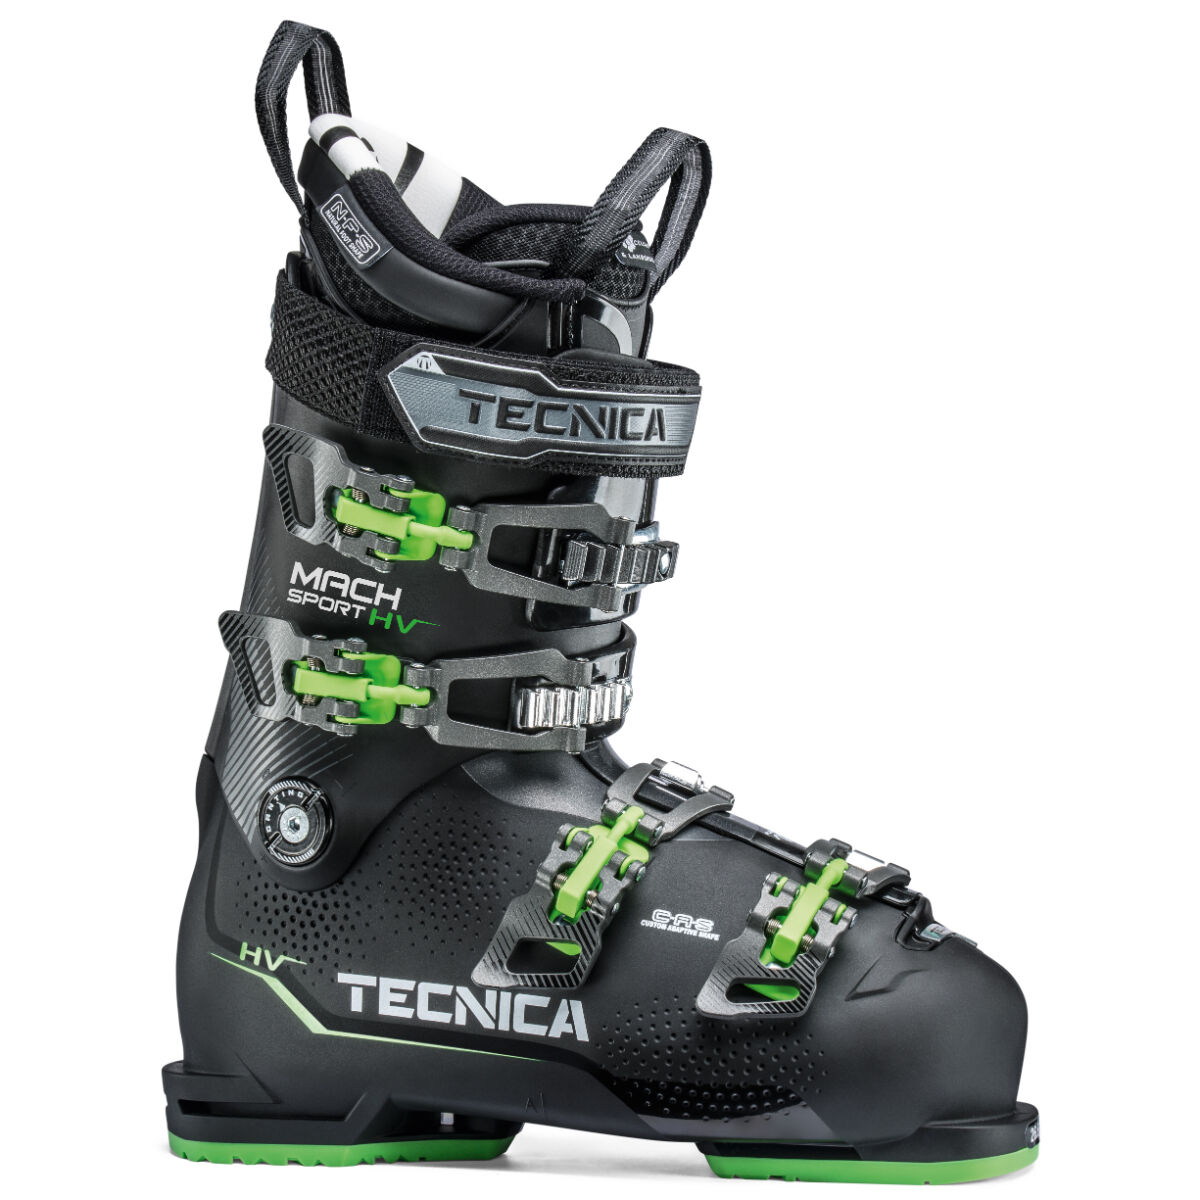 downhill ski boots for sale